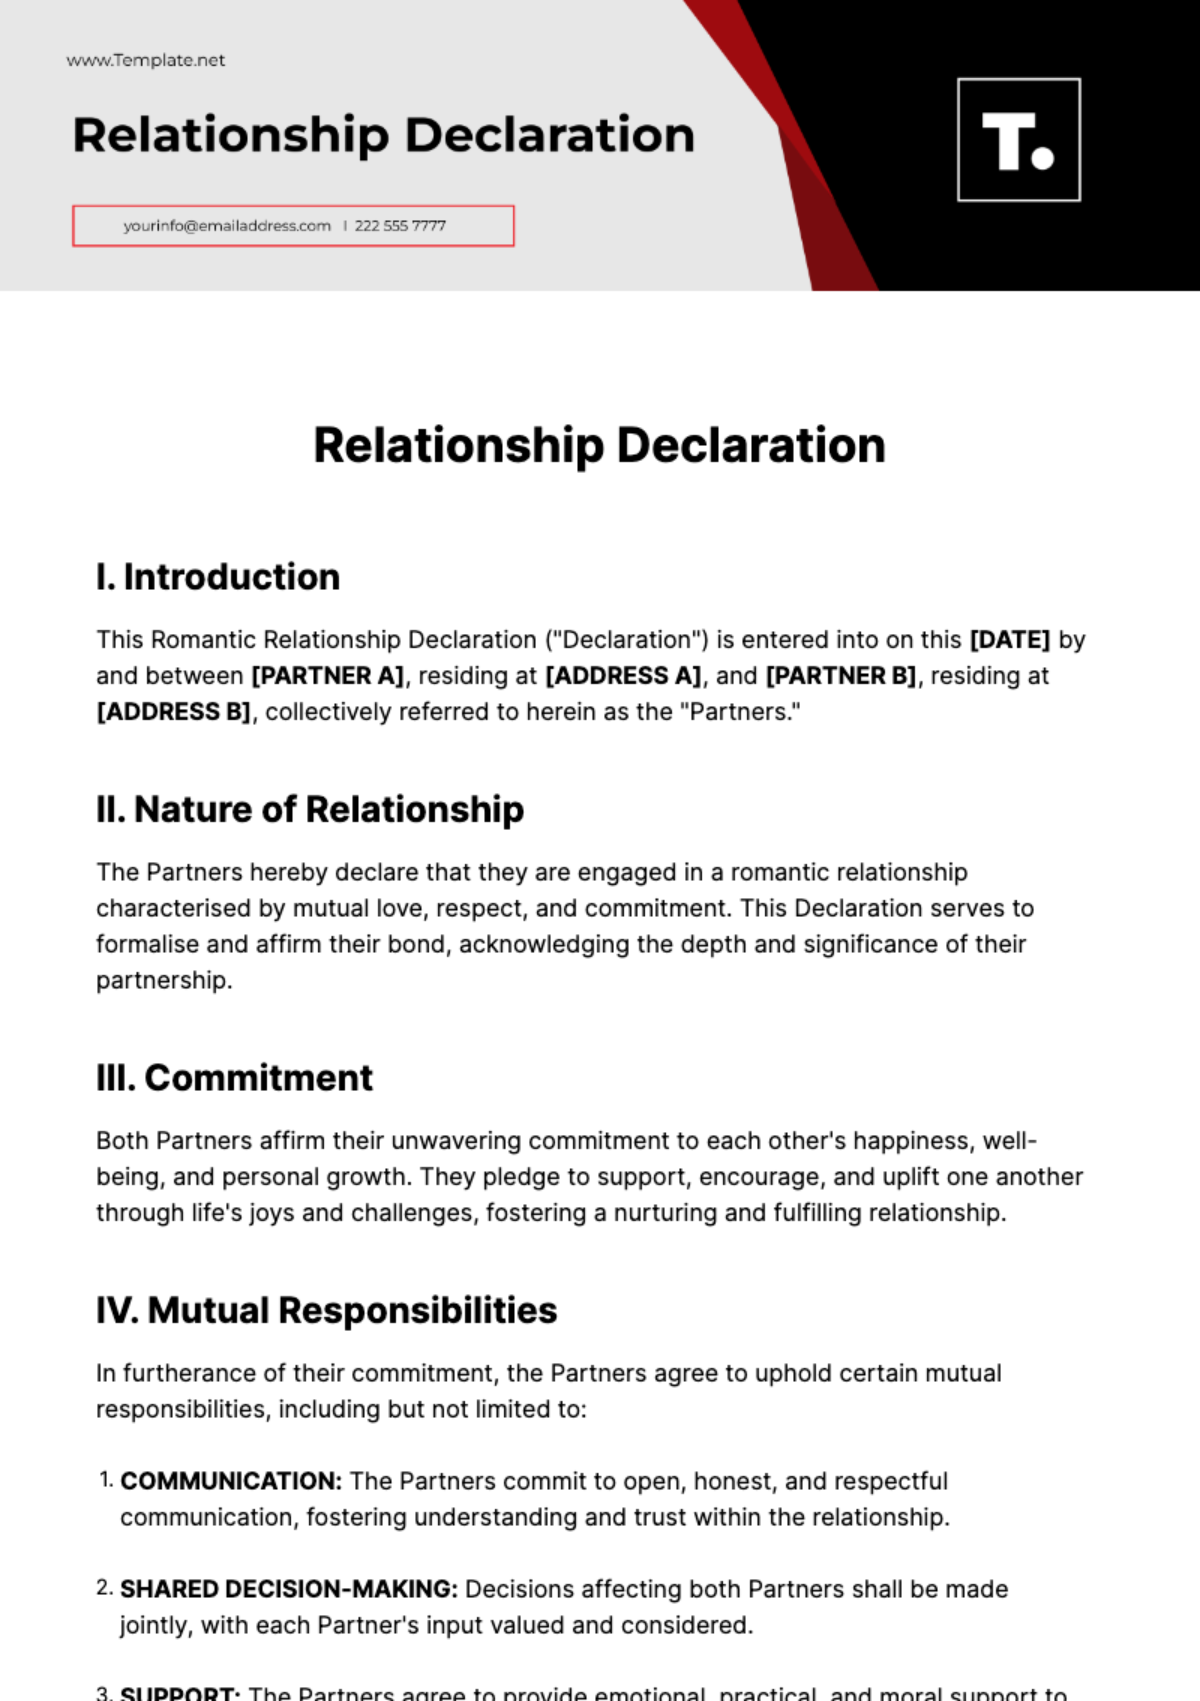 Relationship Declaration Template